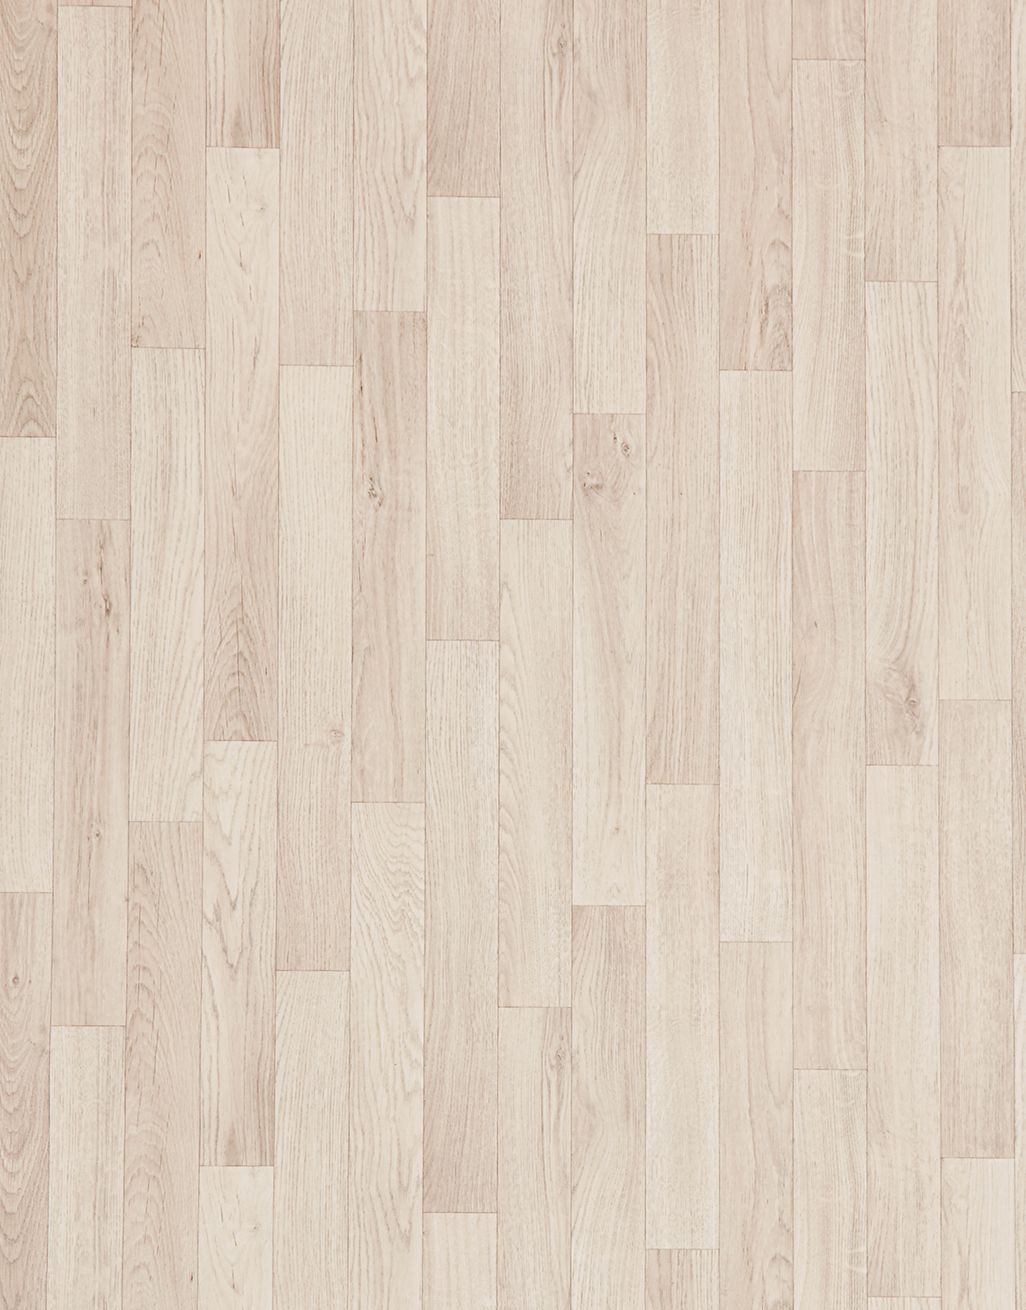 Colorado Columbia Oak Flooring, Columbia Engineered Hardwood Flooring Reviews